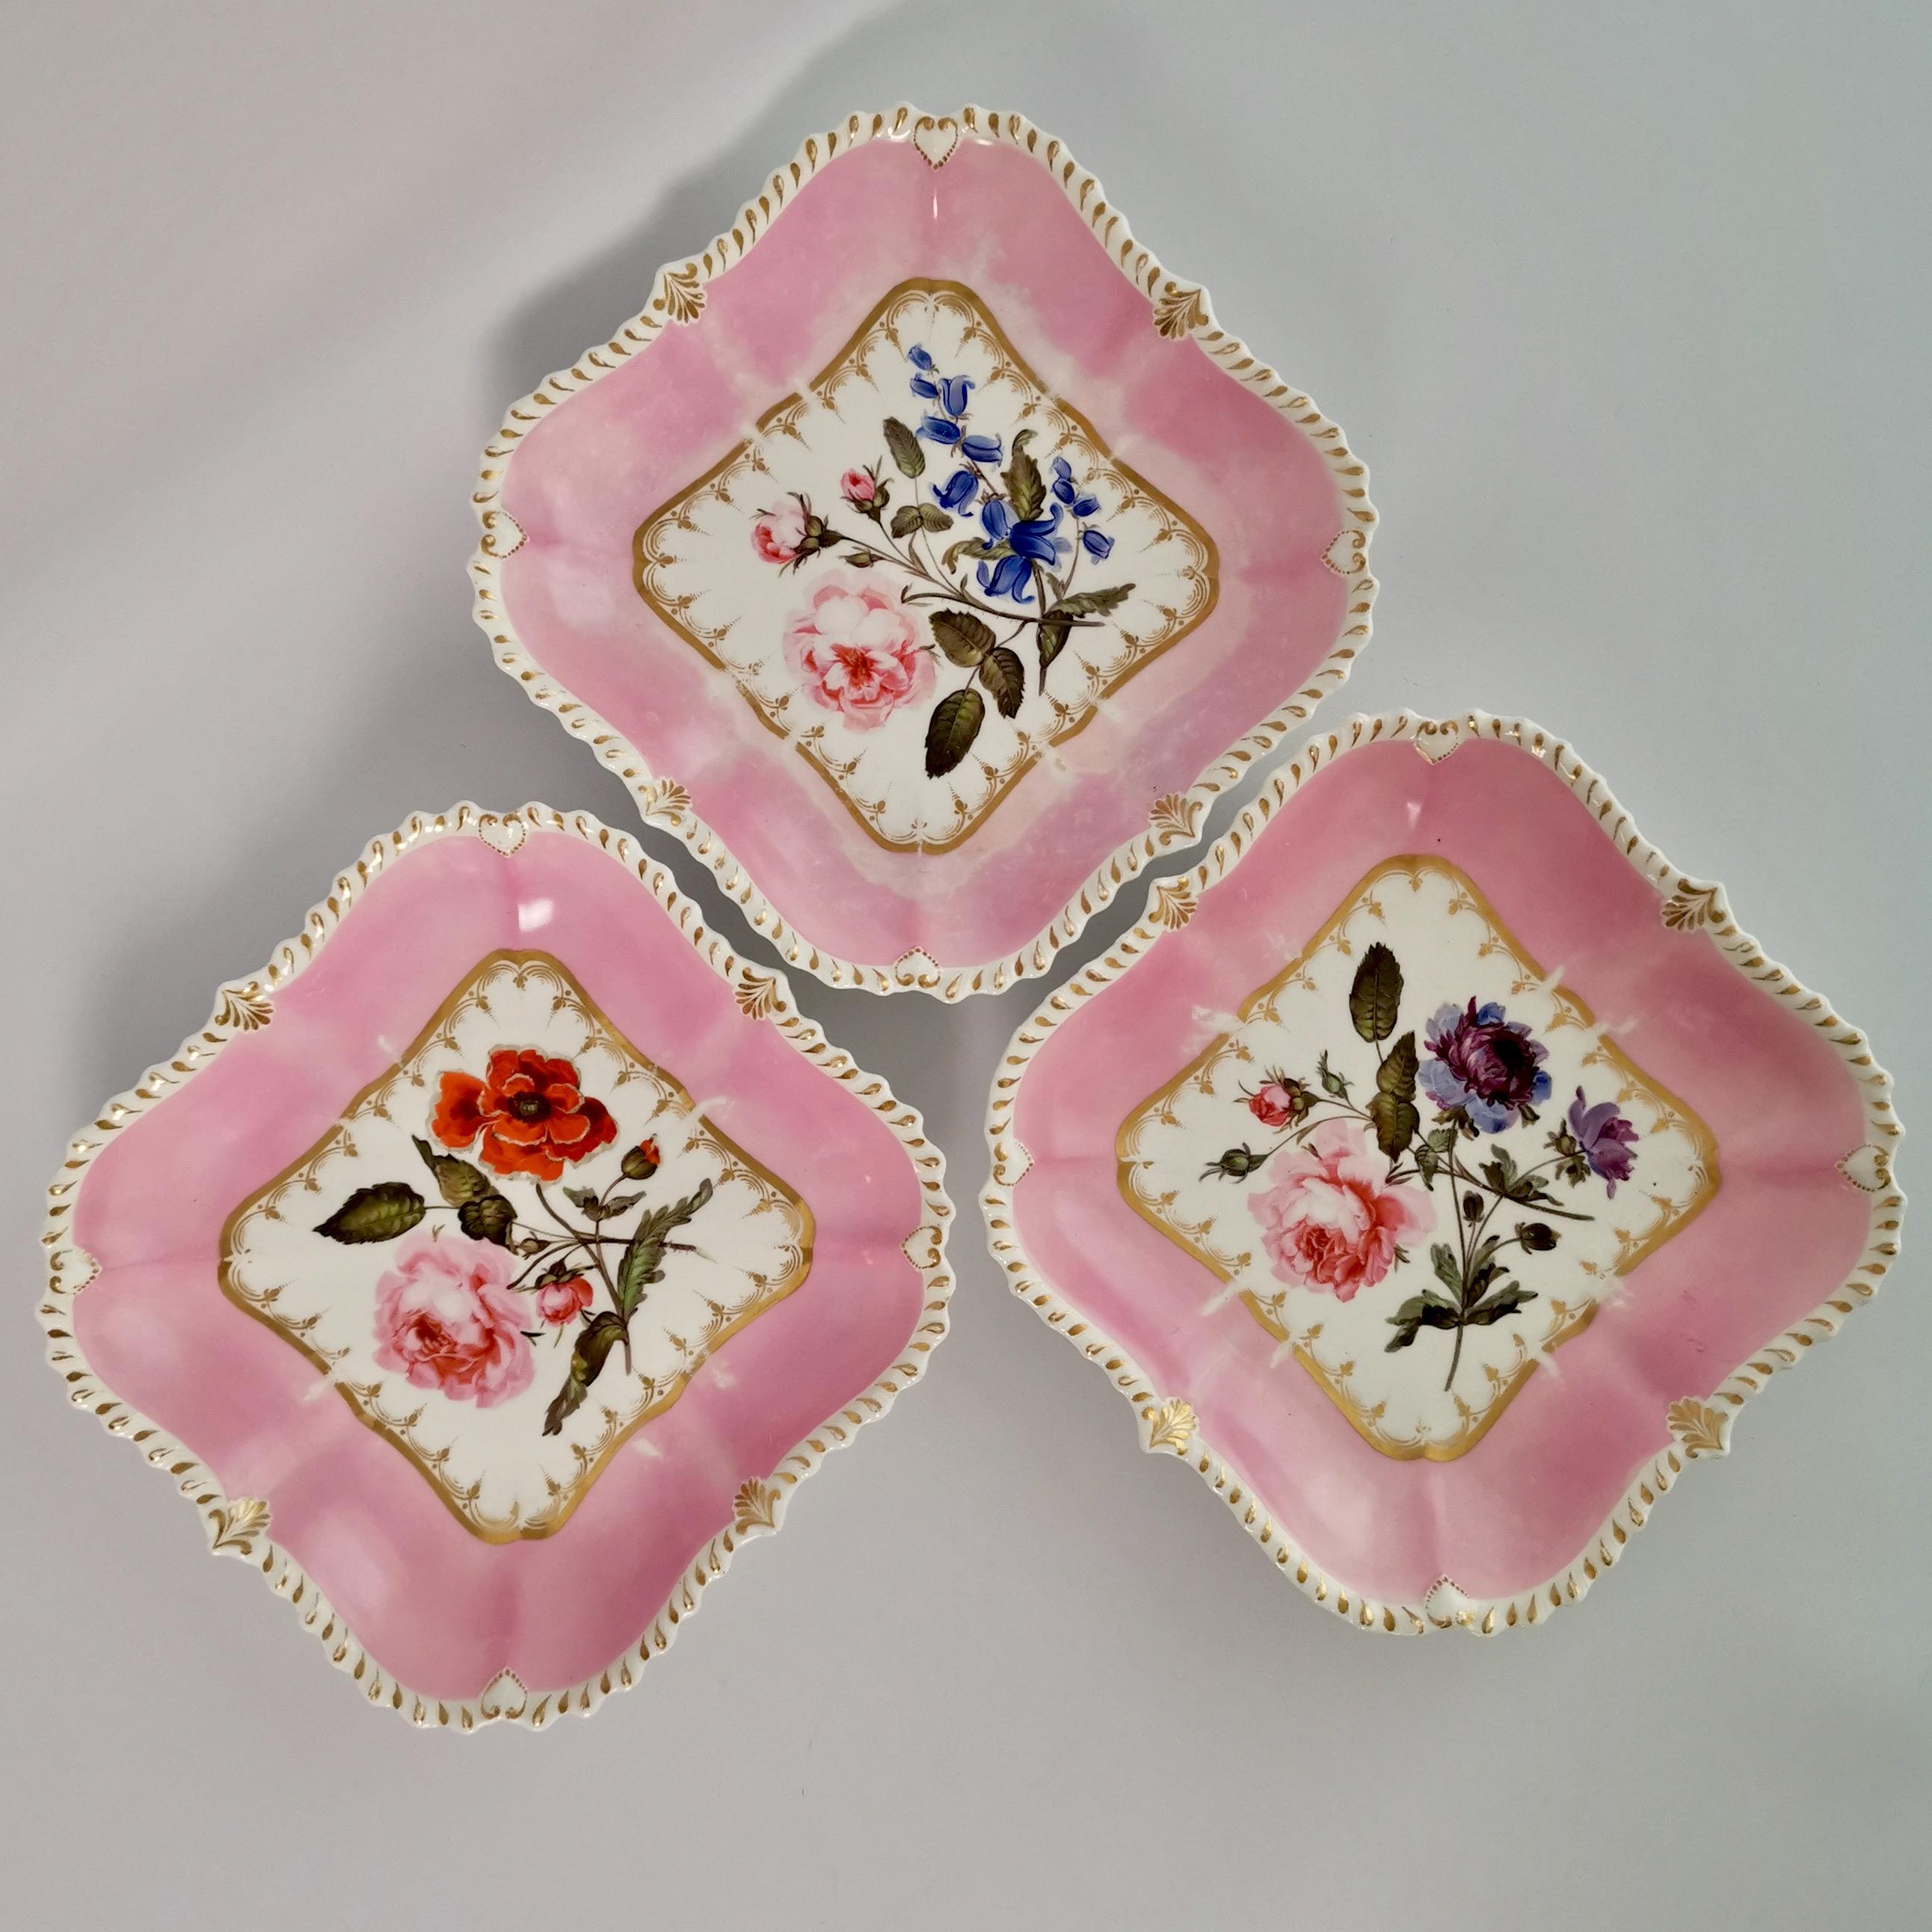 Coalport Porcelain Dessert Service, Pink with Flowers, Regency 1820-1825 1